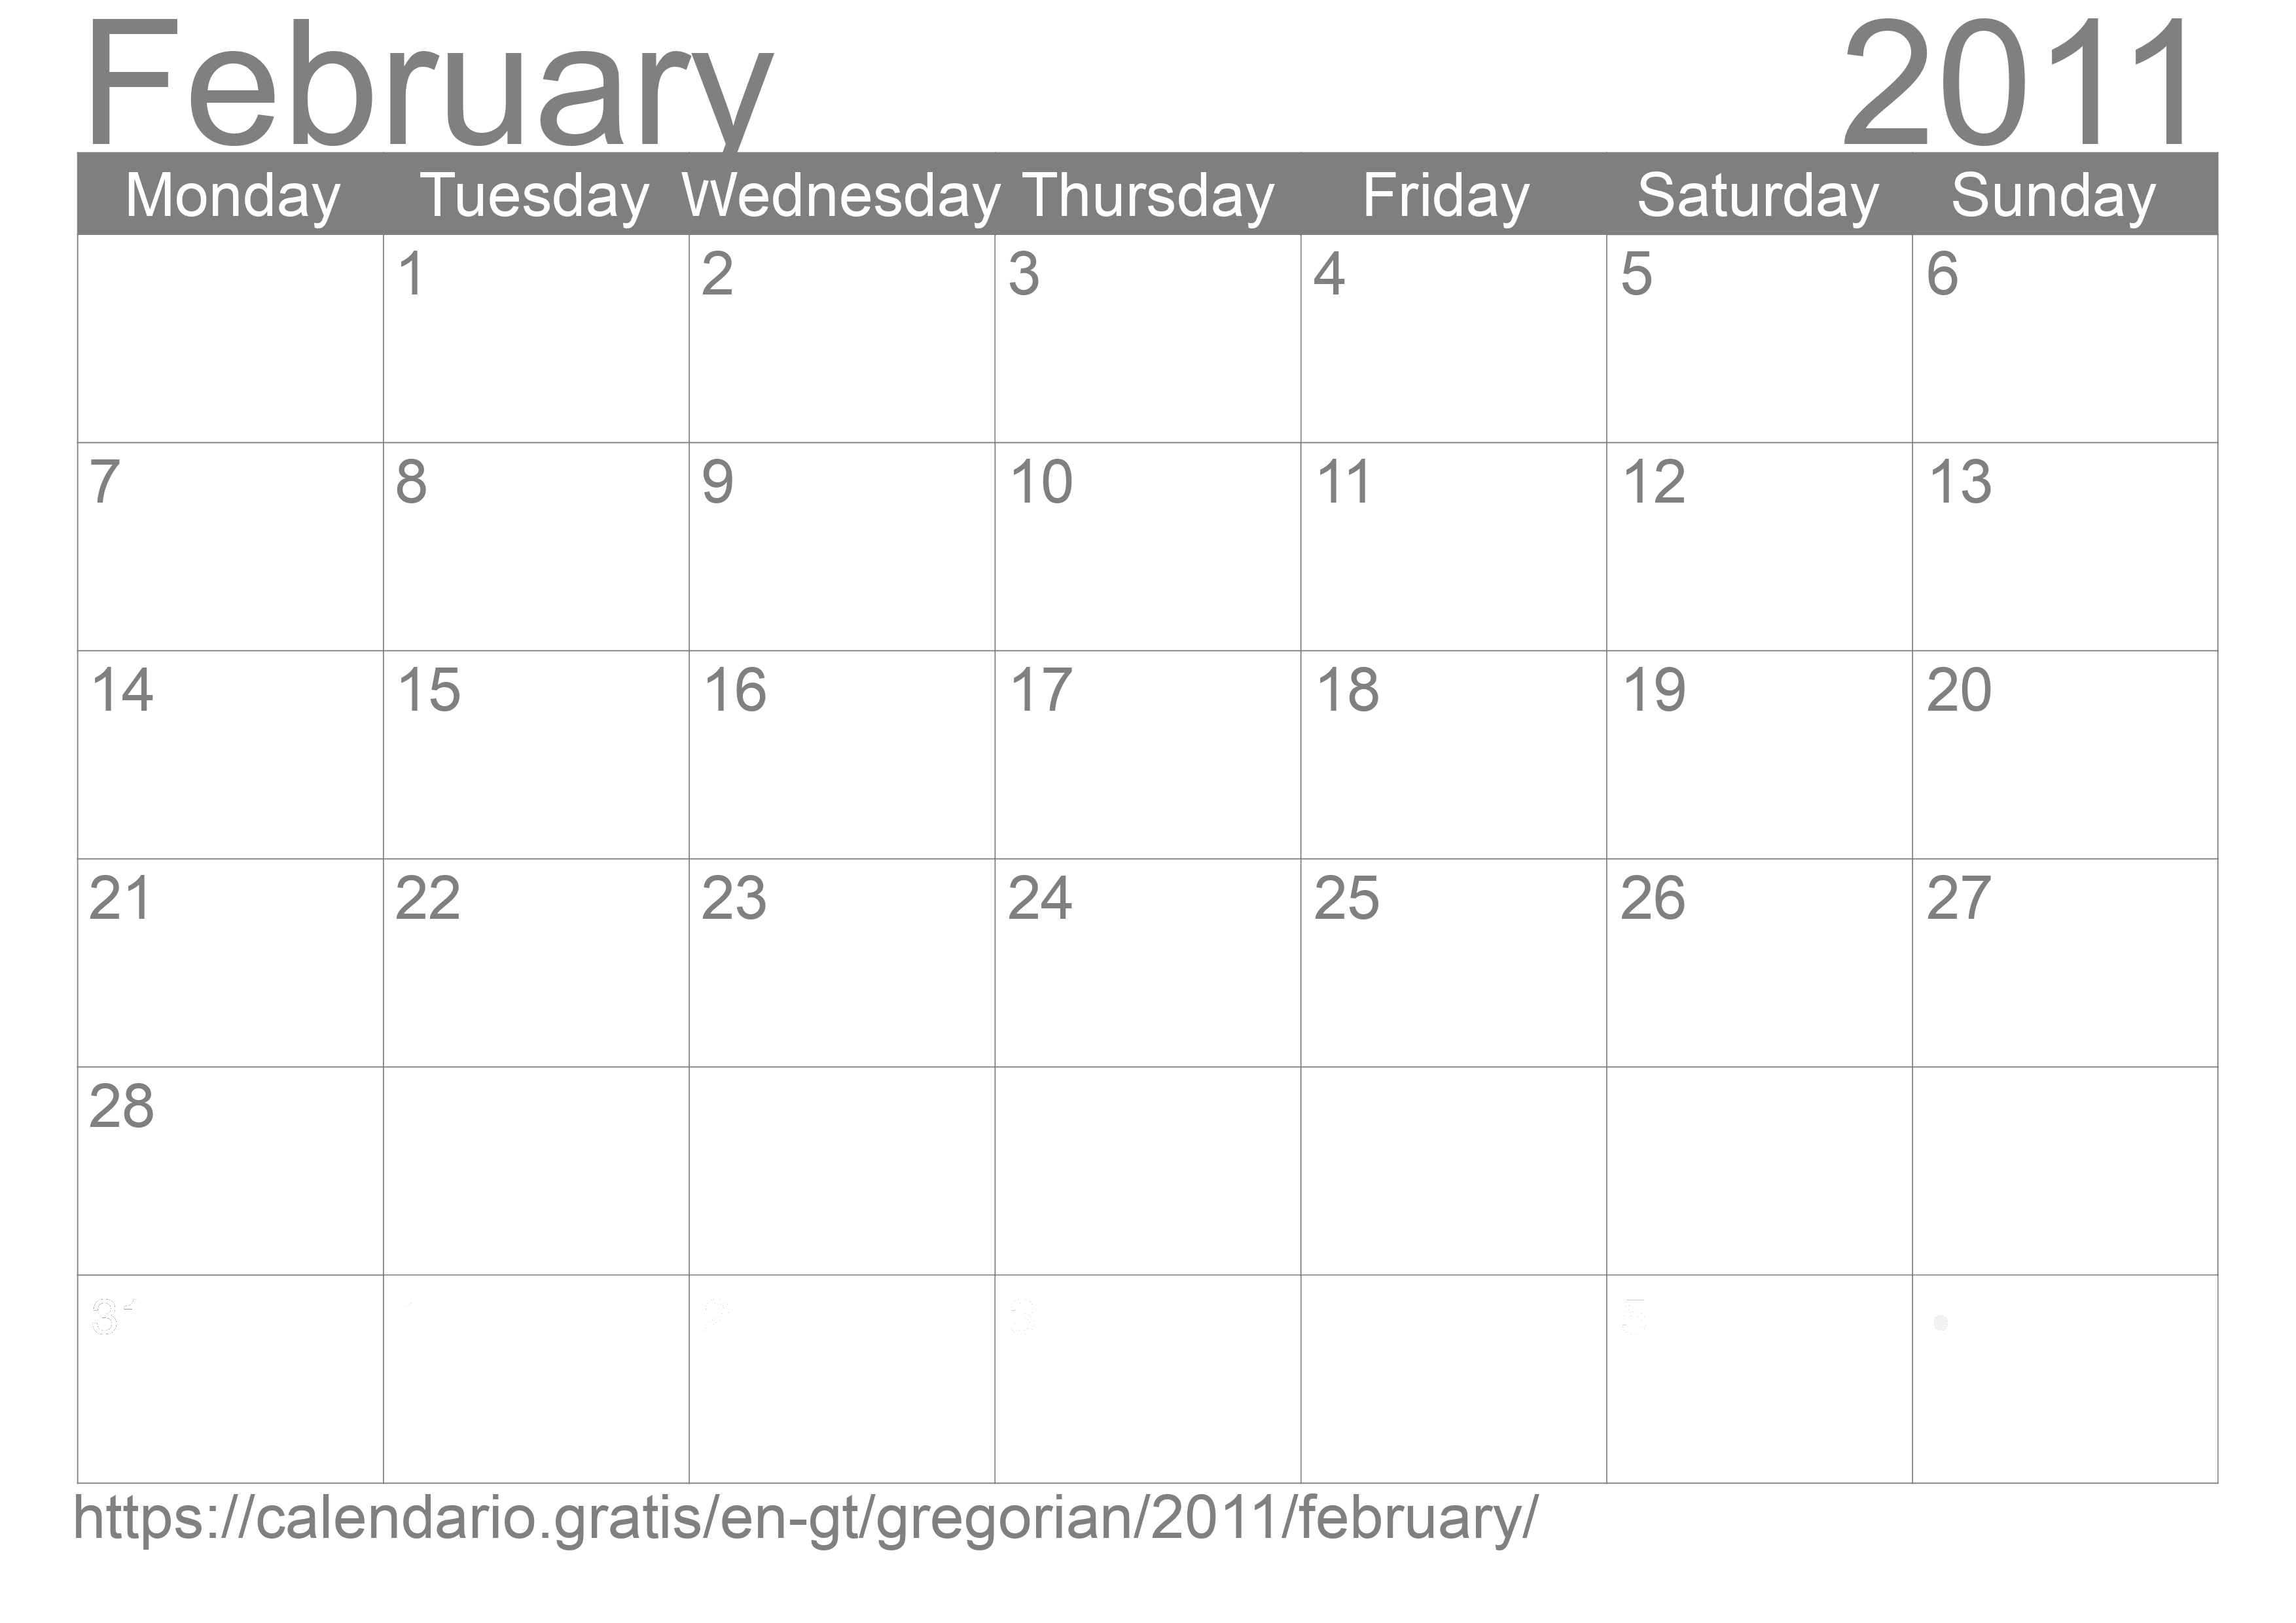 Calendar February 2011 to print